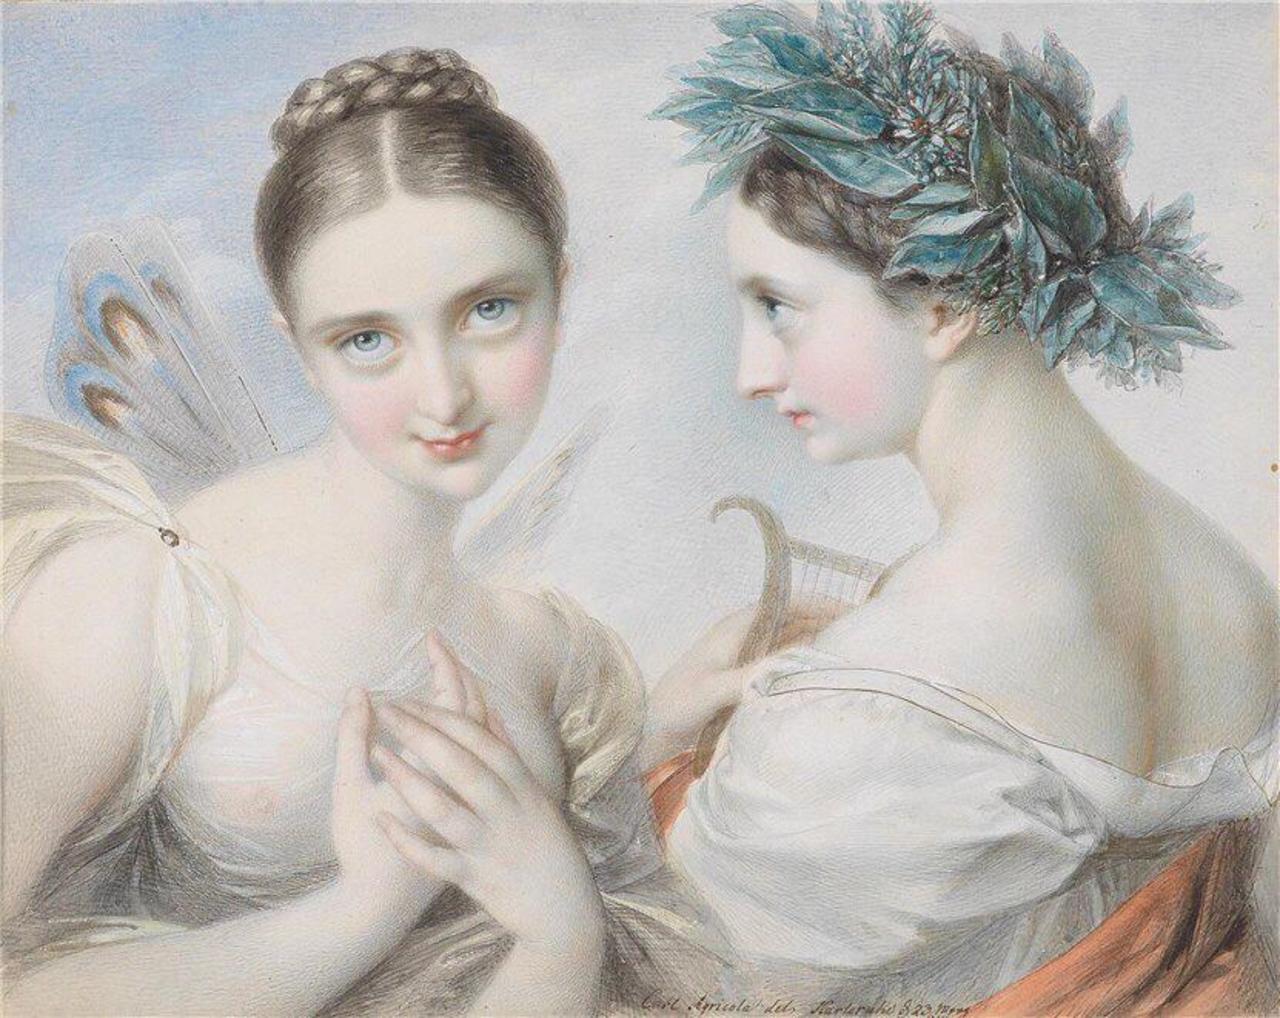 RT @Peepsqueak: Carl Josef Agricola (1779-1852) - Two Muses #art | @CerisesMacaron rt @theresamax http://t.co/hJPdooSnpF